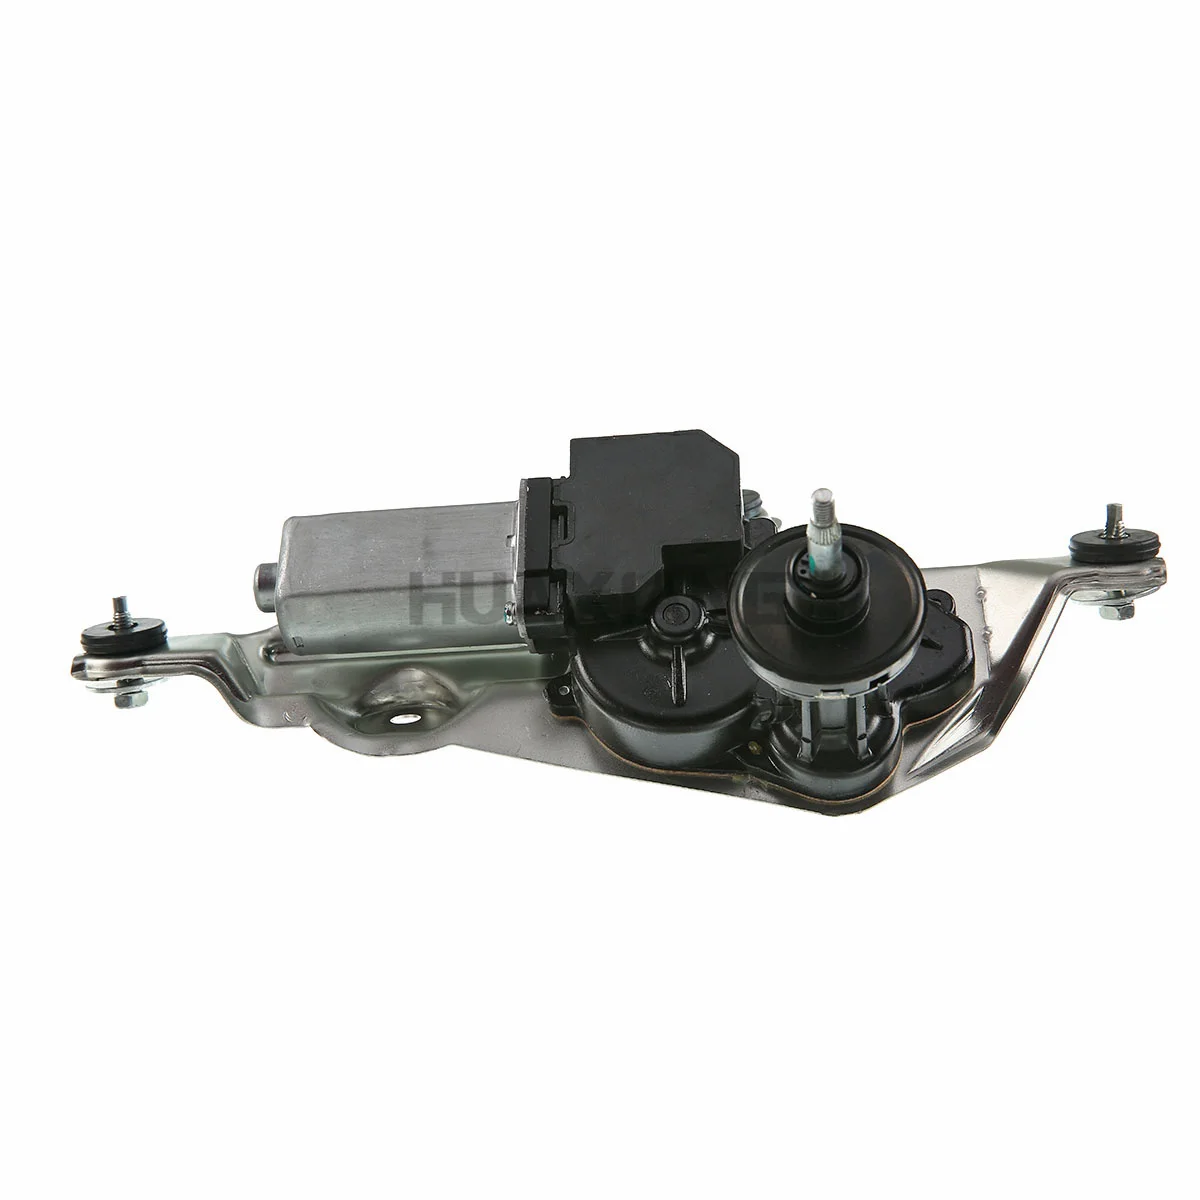 

In-stock CN US CA Windshield Wiper Motor for Lexus RX330 04-06 RX350 07-09 RX400h 8513048030 Rear 8513048030